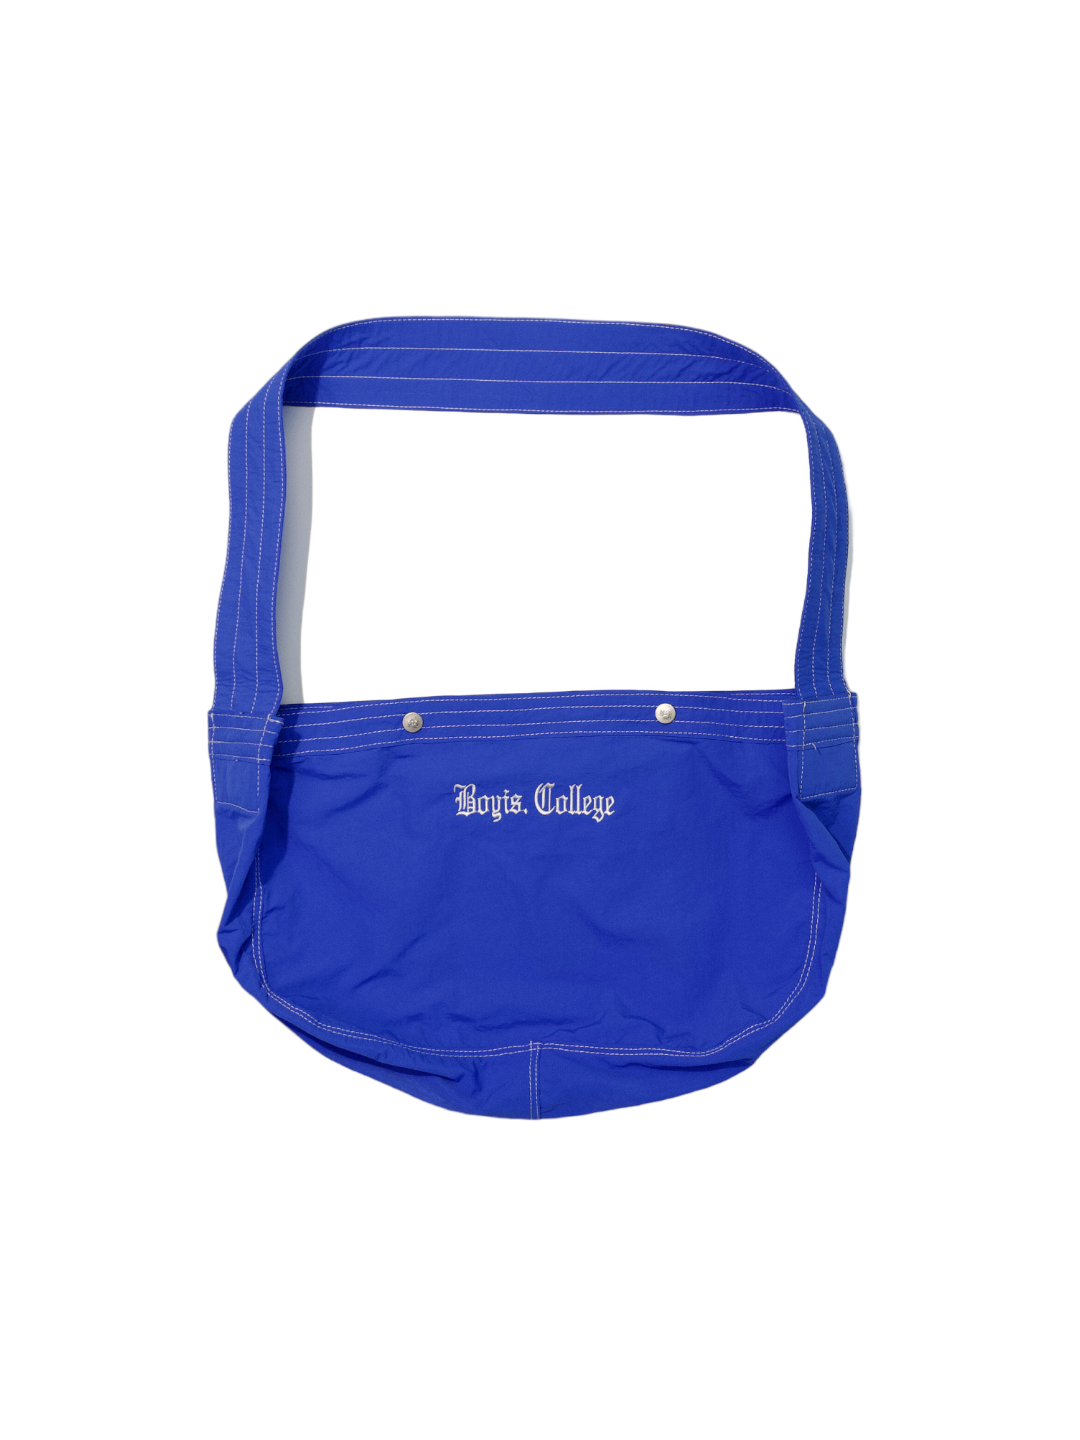 NEWSBOY BAG (COLLEGE-BLUE)